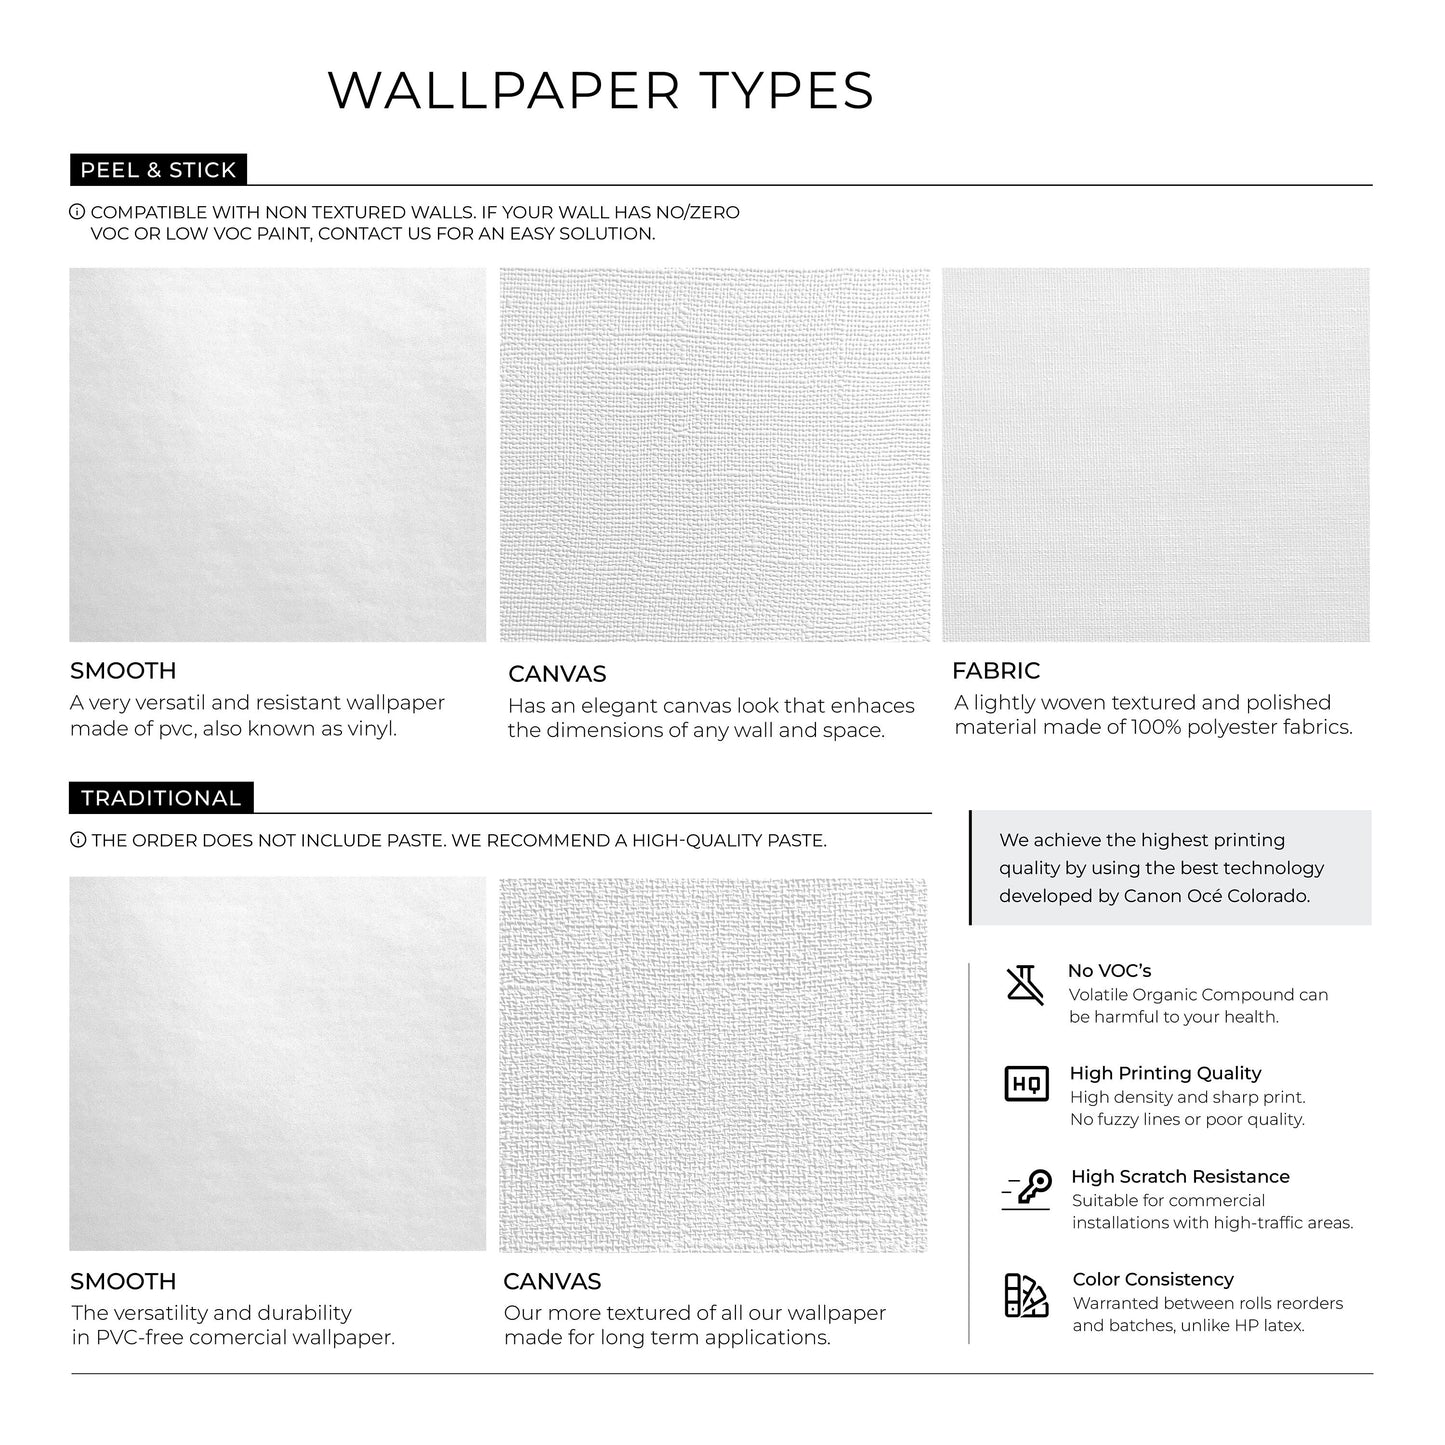 Minimal Geometric Wallpaper Removable Wallpaper Peel and Stick Wallpaper Wall Paper Wall Mural - B287